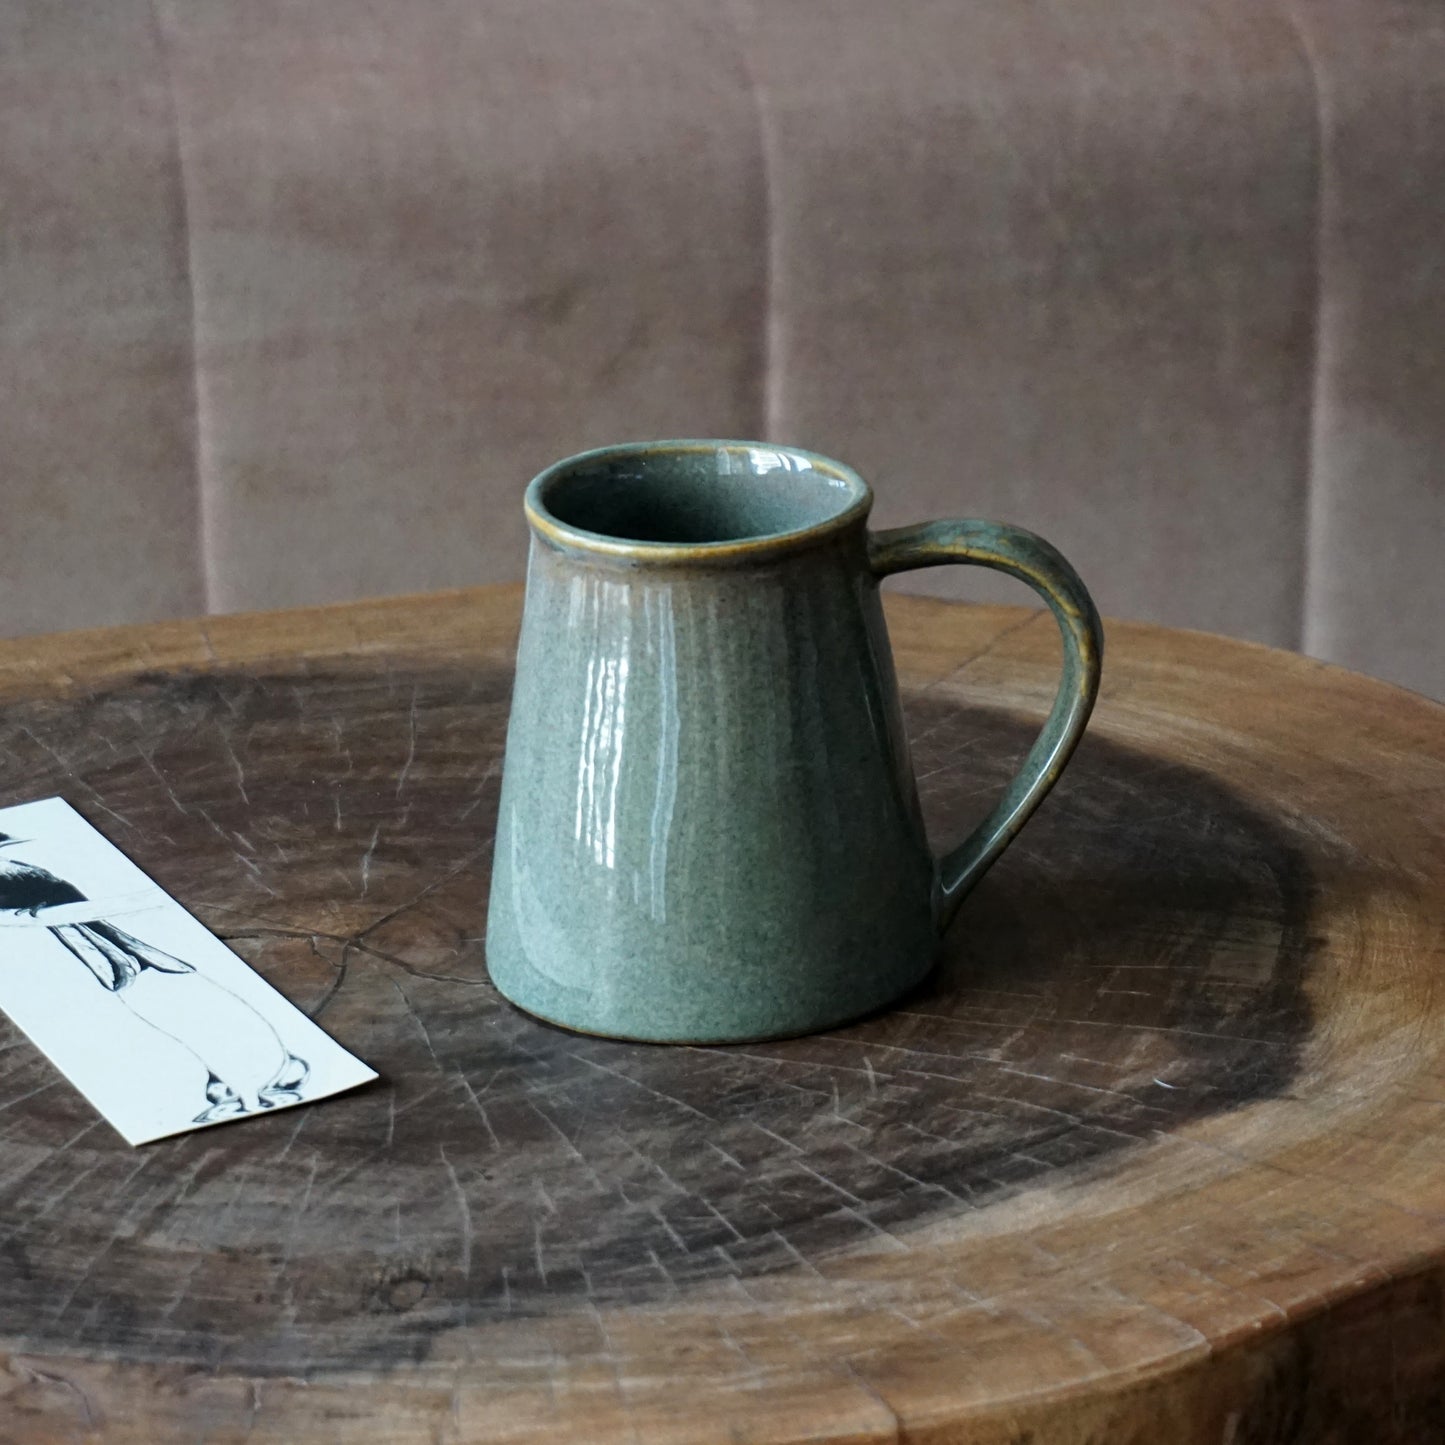 Classic Ceramic Coffee Mug